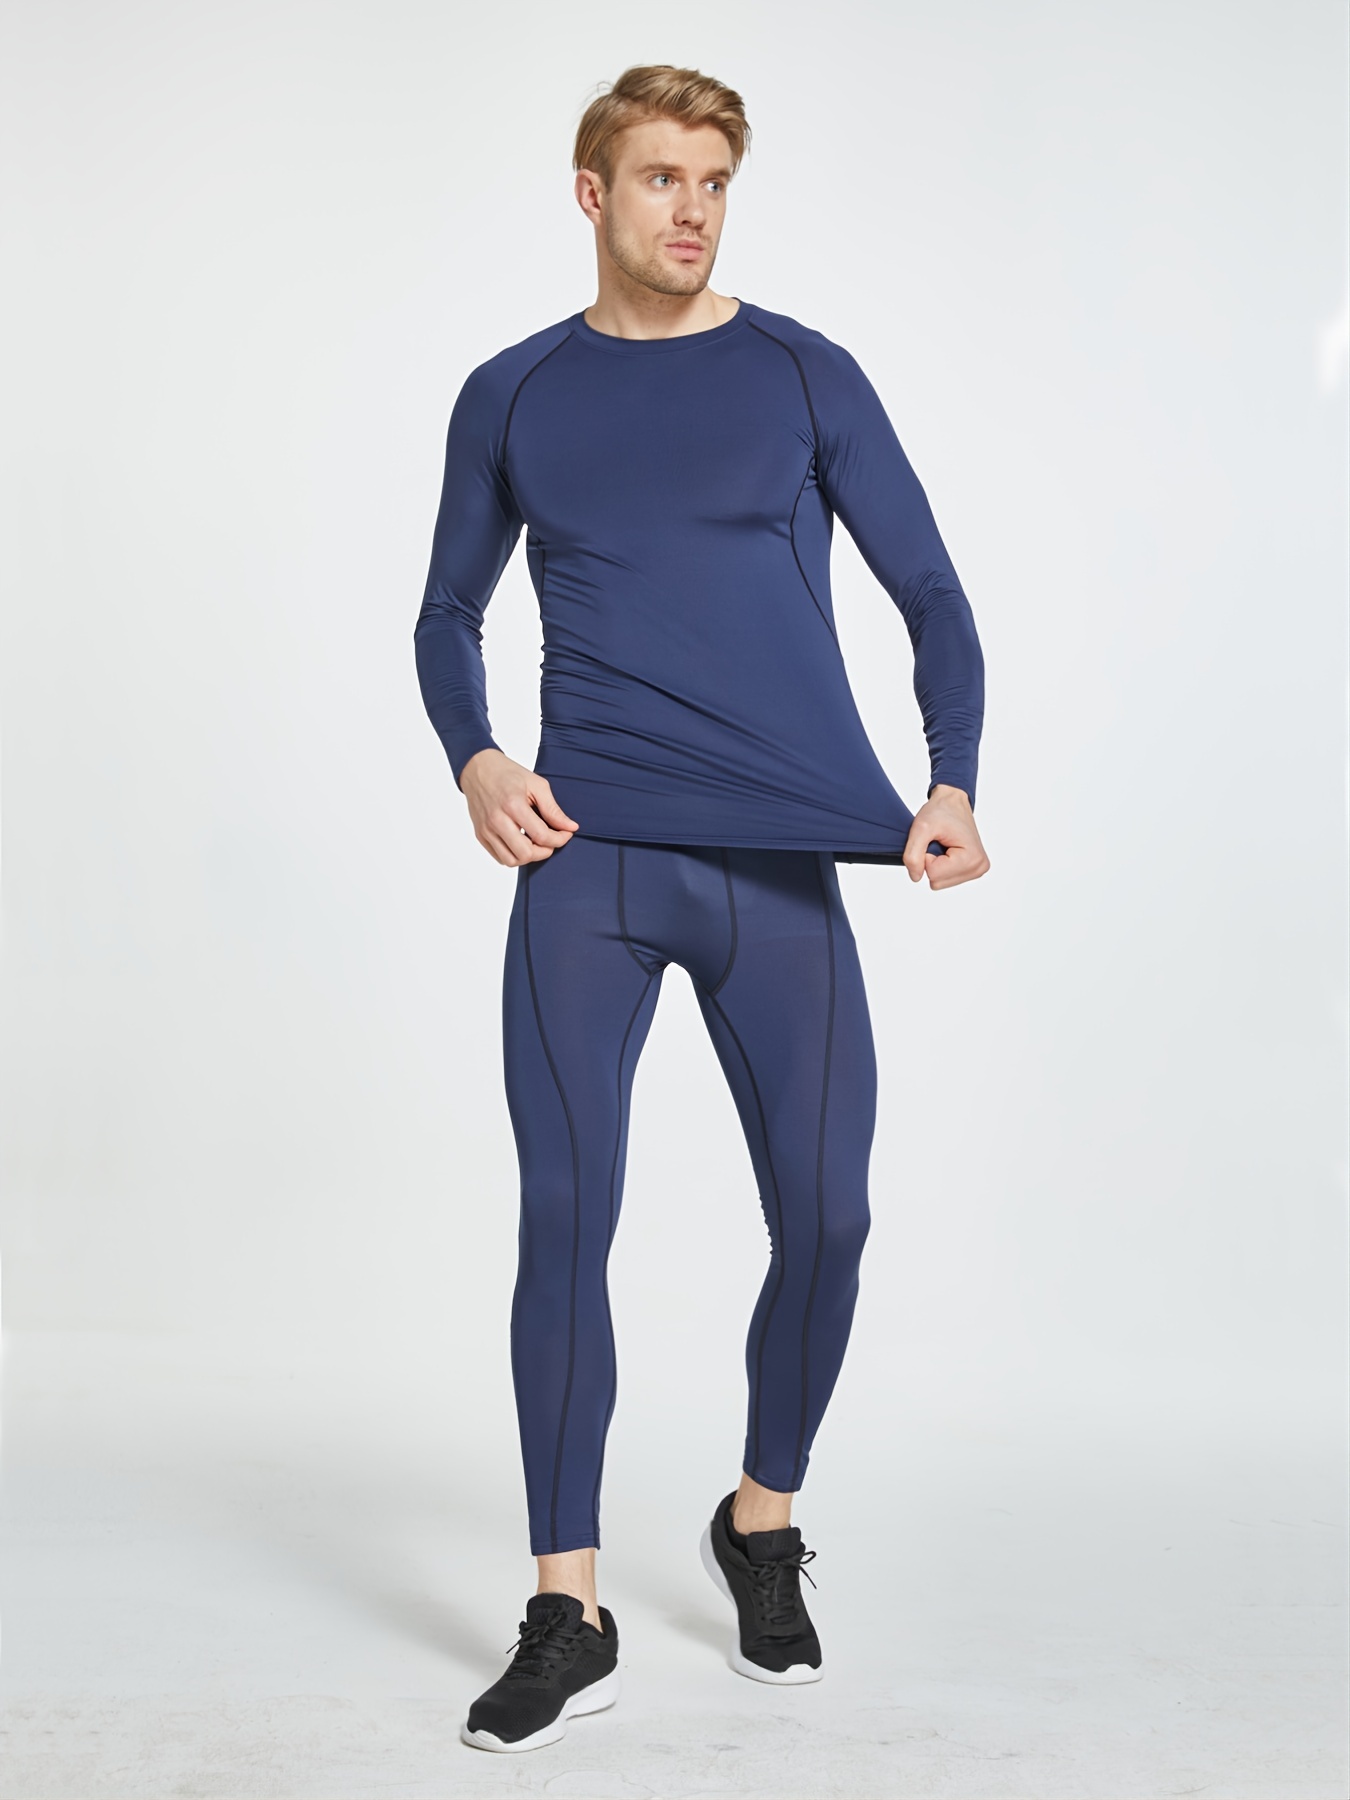 OFFSIDE Pantalones de compresión para hombre, pantalones ajustados de  entrenamiento para correr, capa base de secado fresco, leggings para  hombre